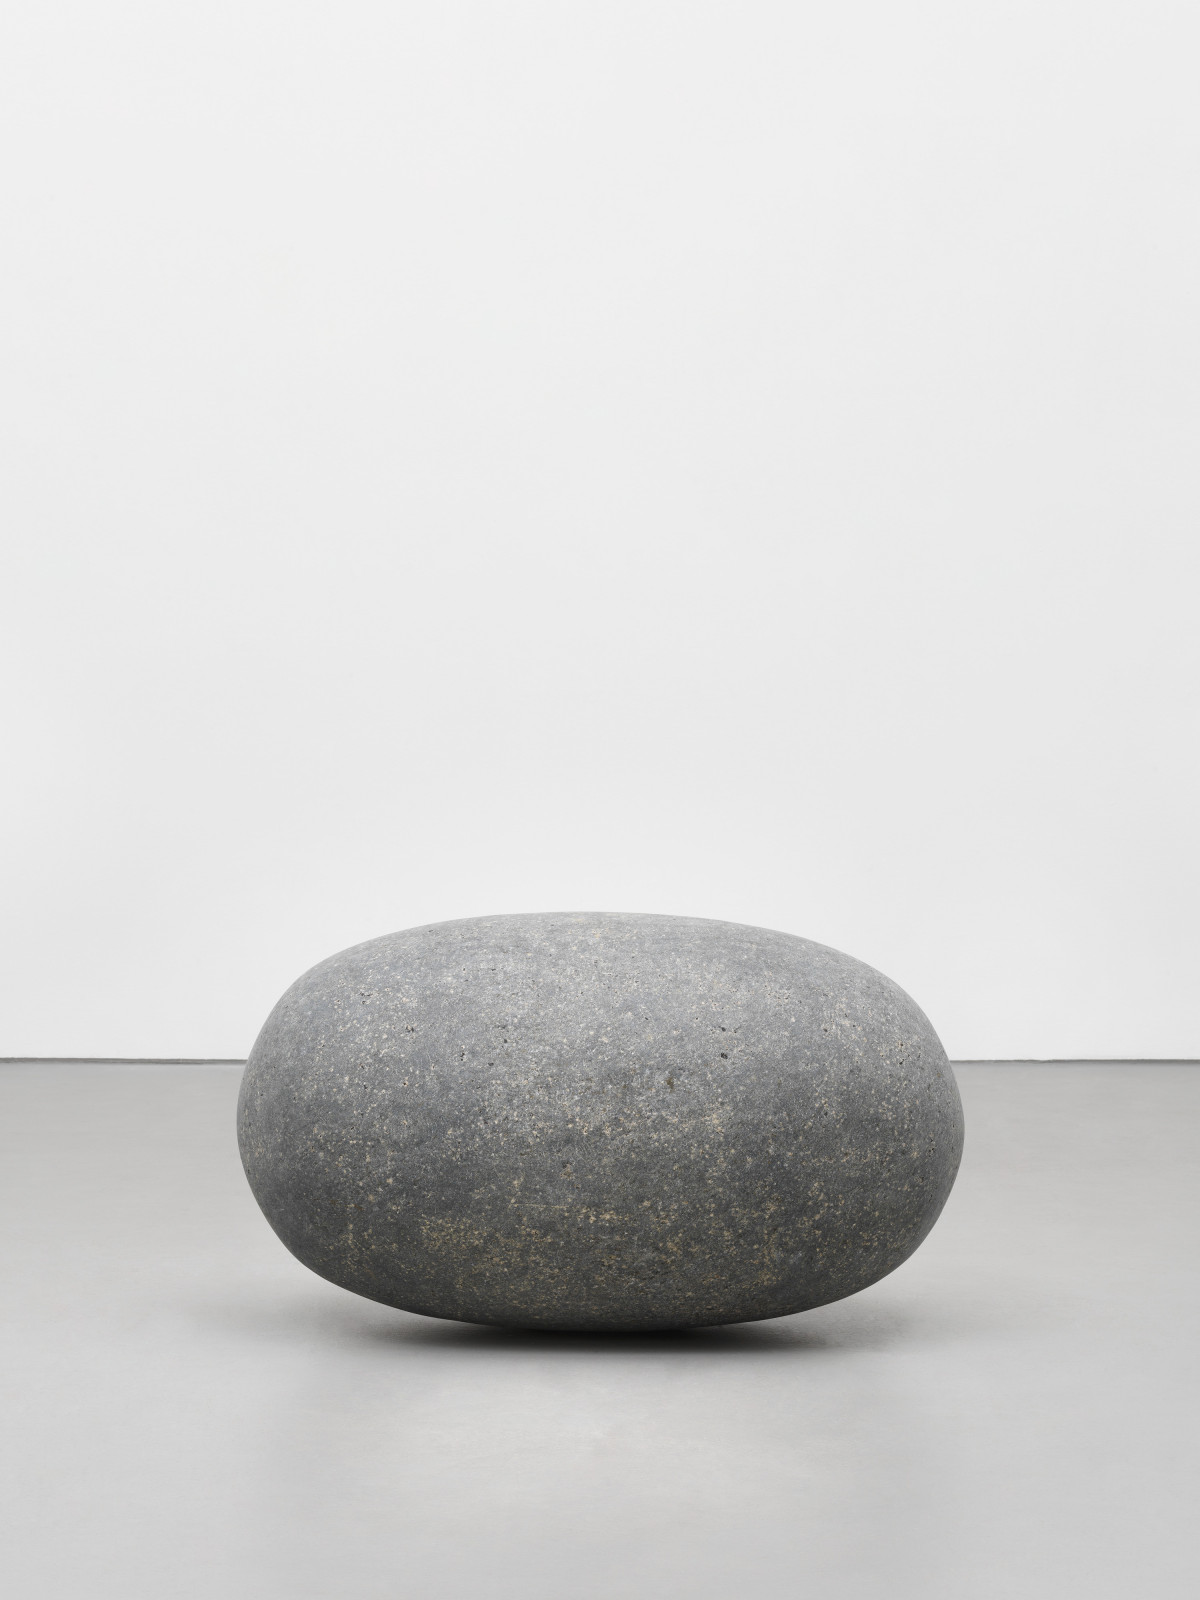 Wolfgang Laib, ‘Brahmanda’, 2014-2022, Indian black granite